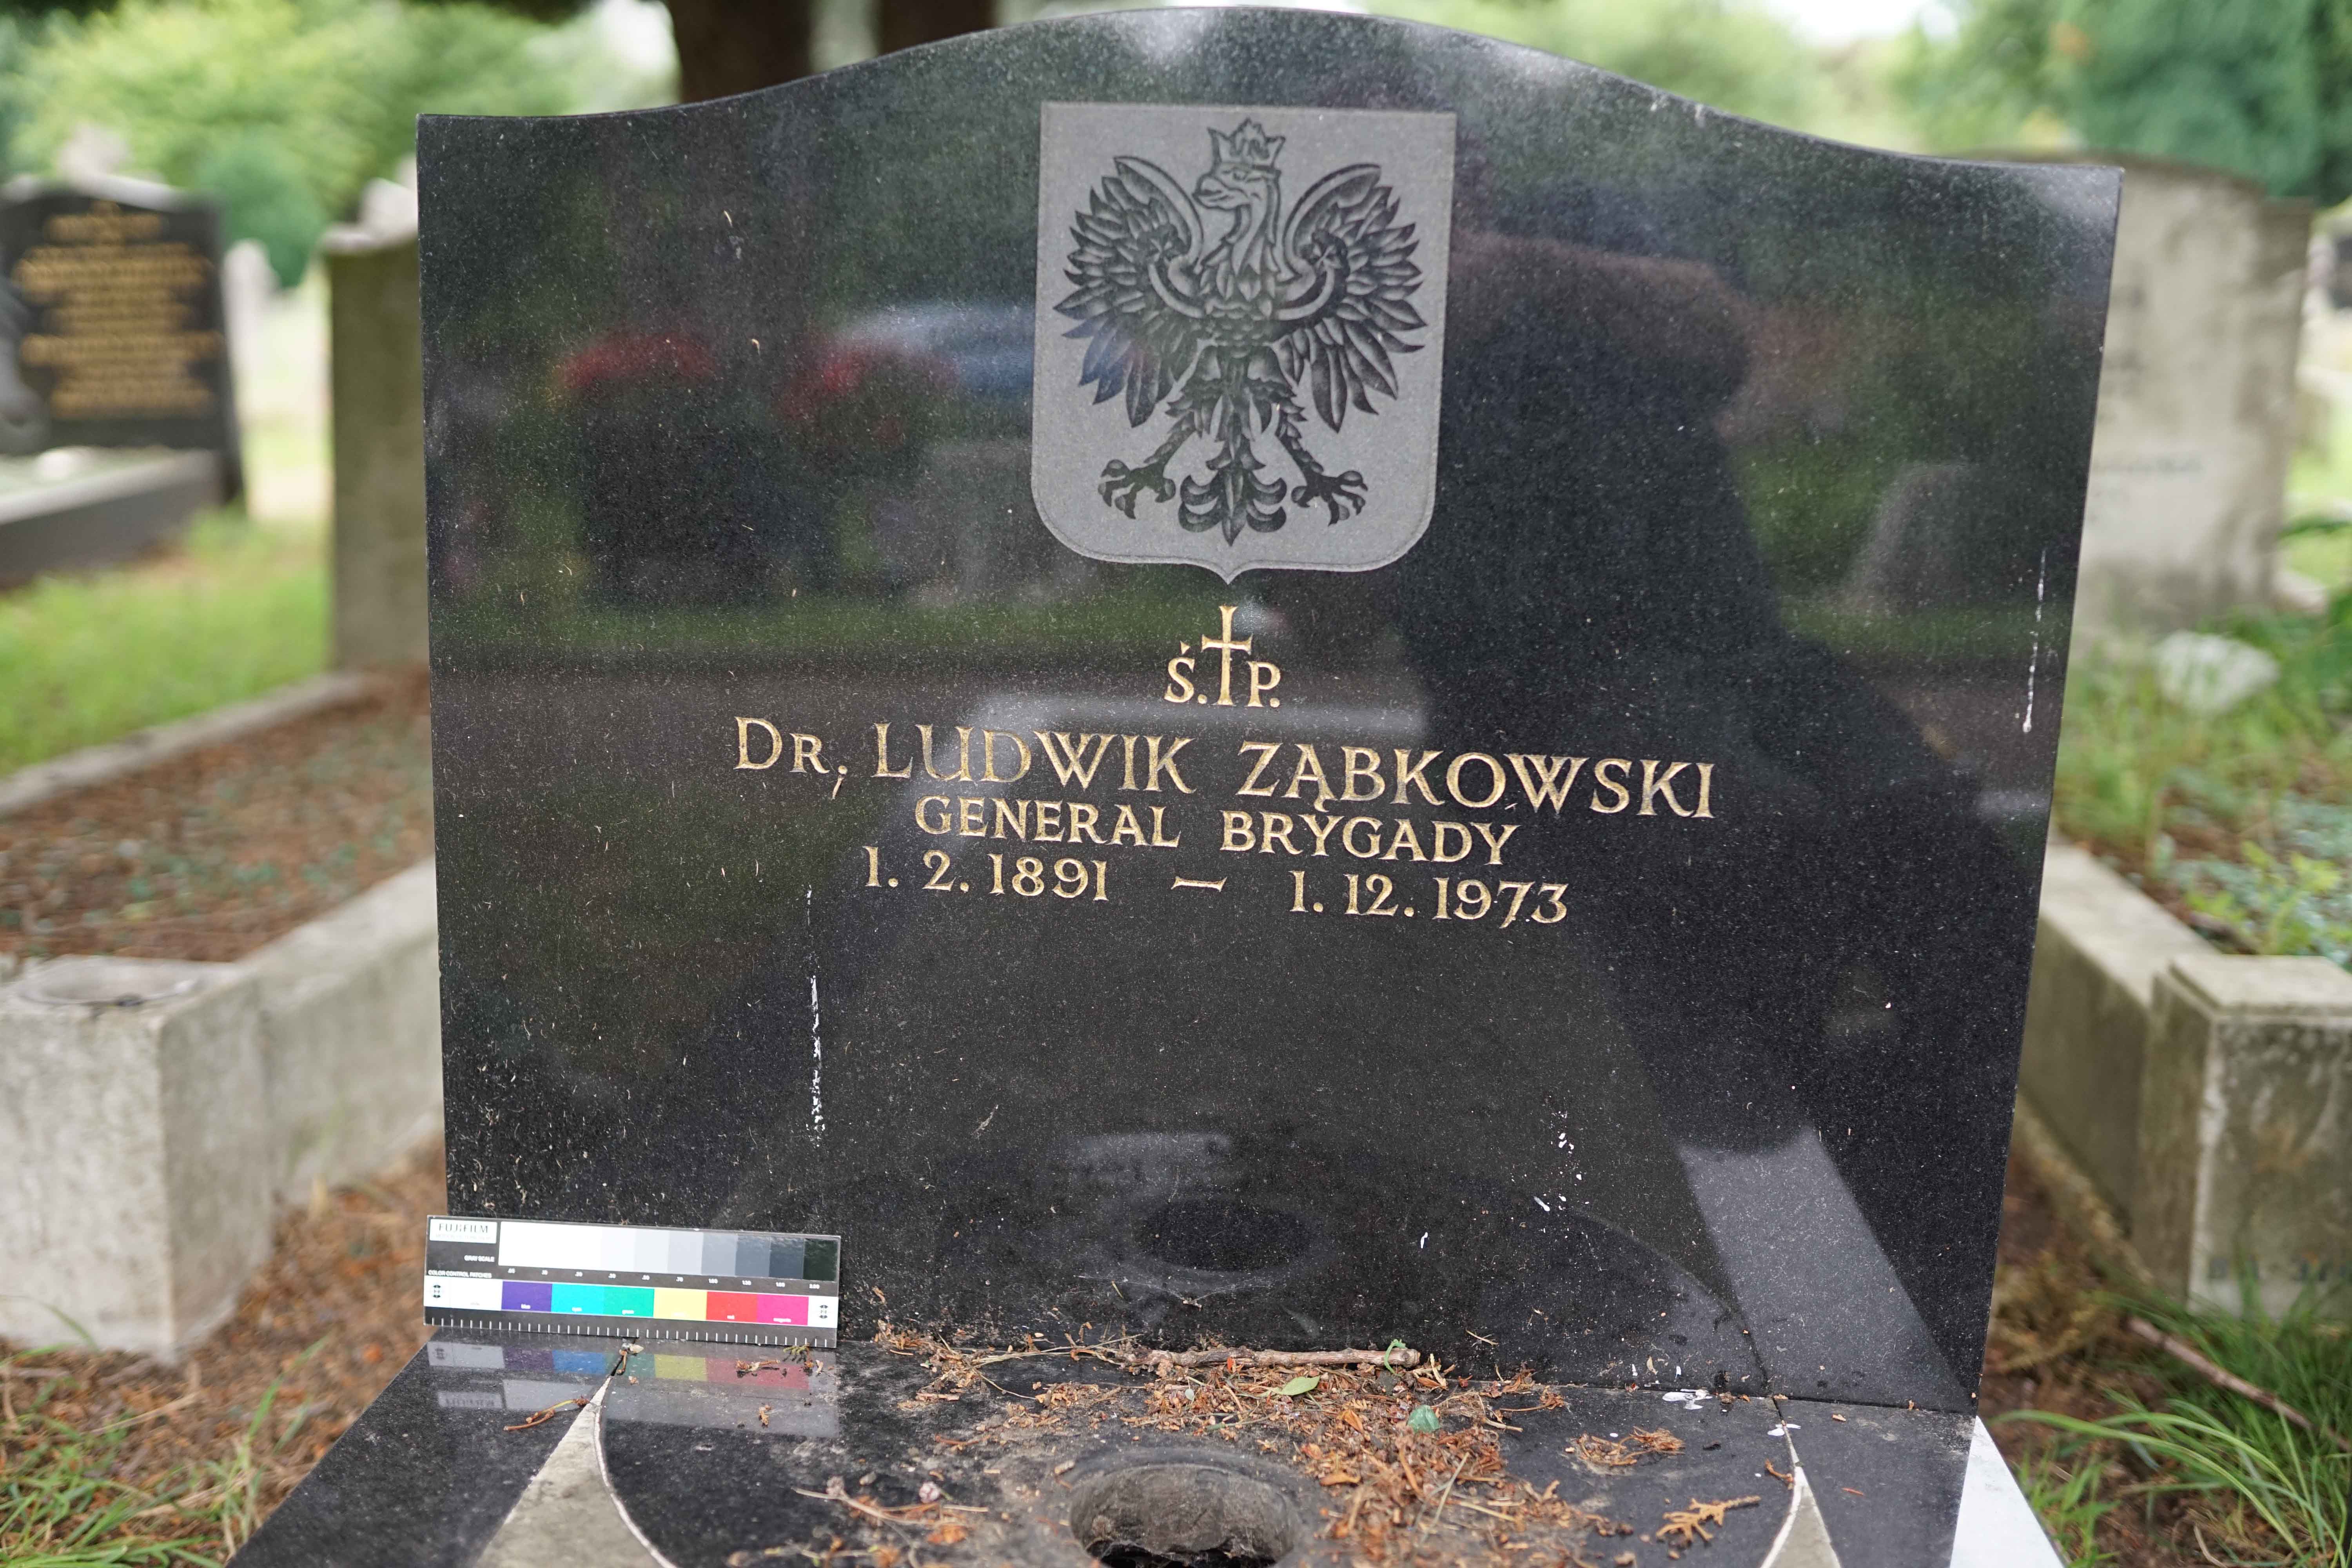 Inscription on the gravestone of Ludwik Ząbkowski